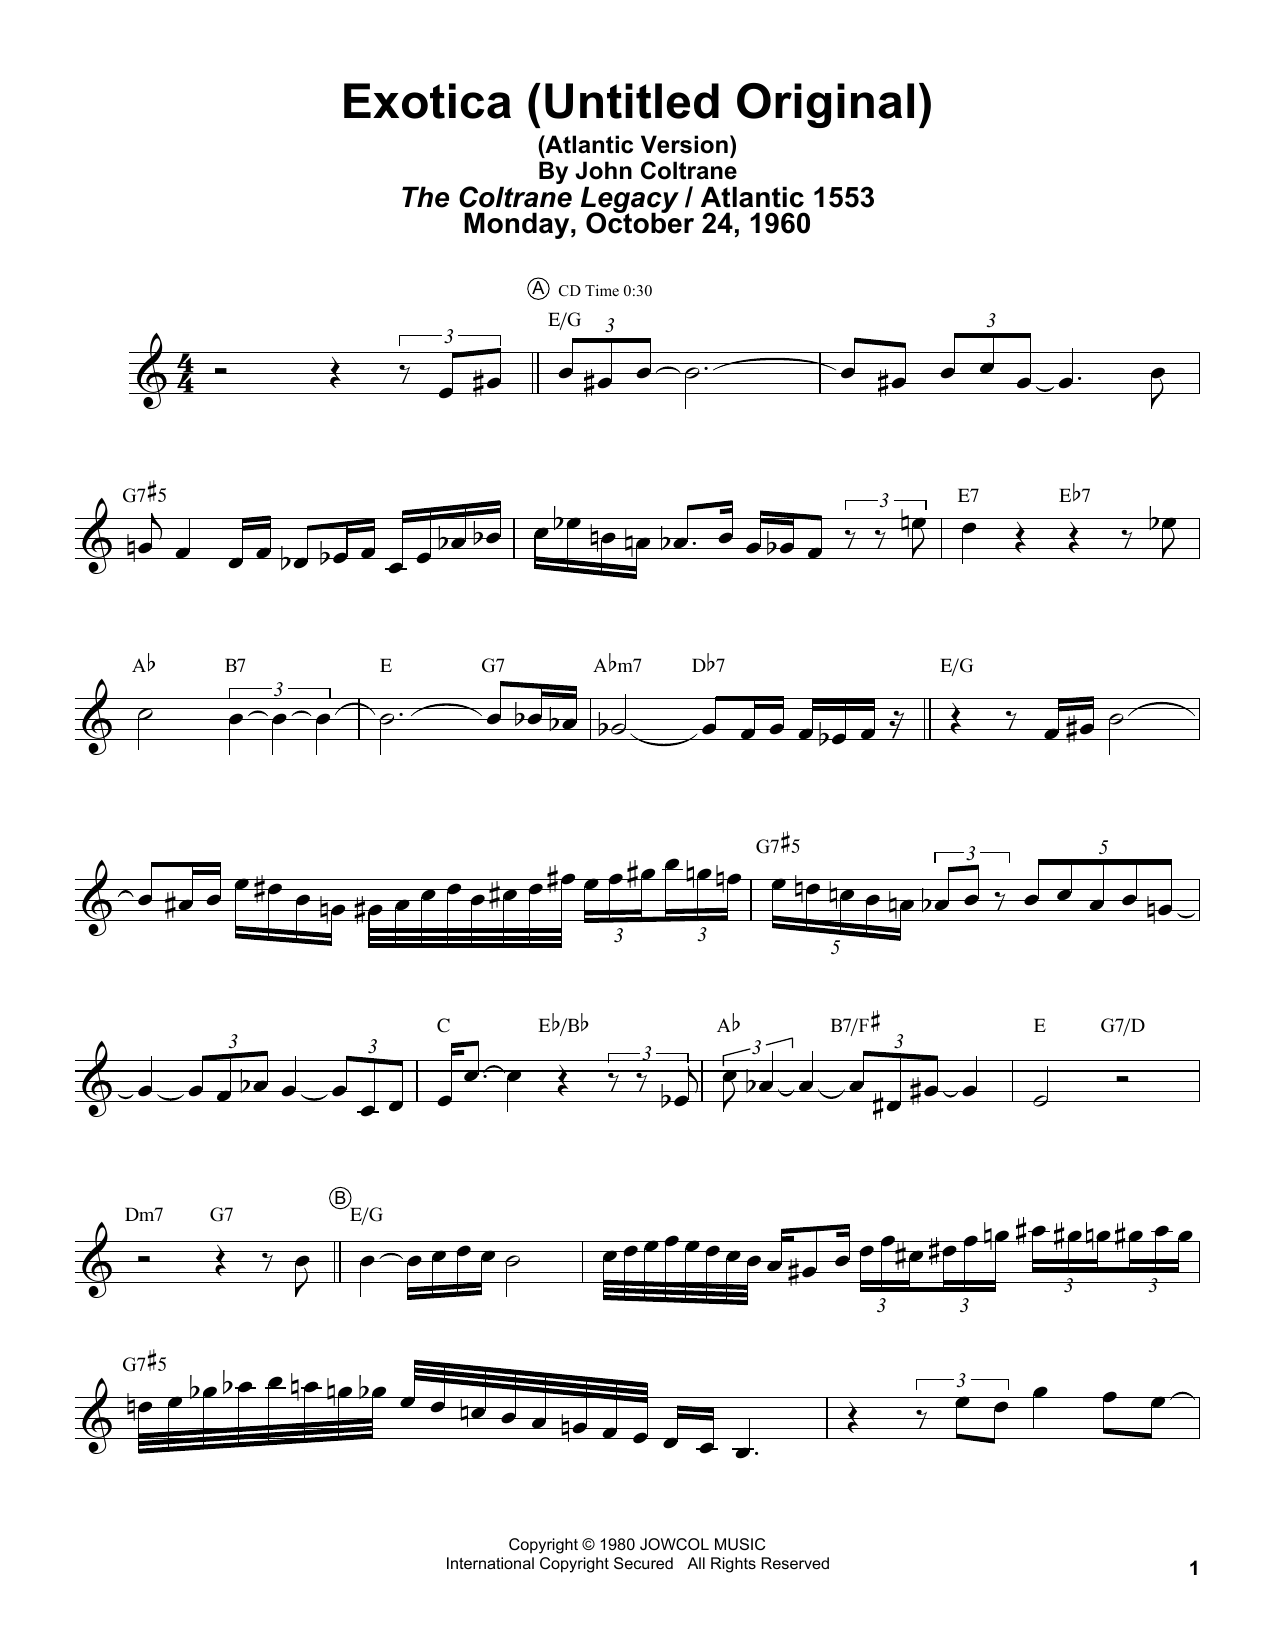 John Coltrane Exotica (Untitled Original) (Atlantic Version) Sheet Music Notes & Chords for Tenor Sax Transcription - Download or Print PDF